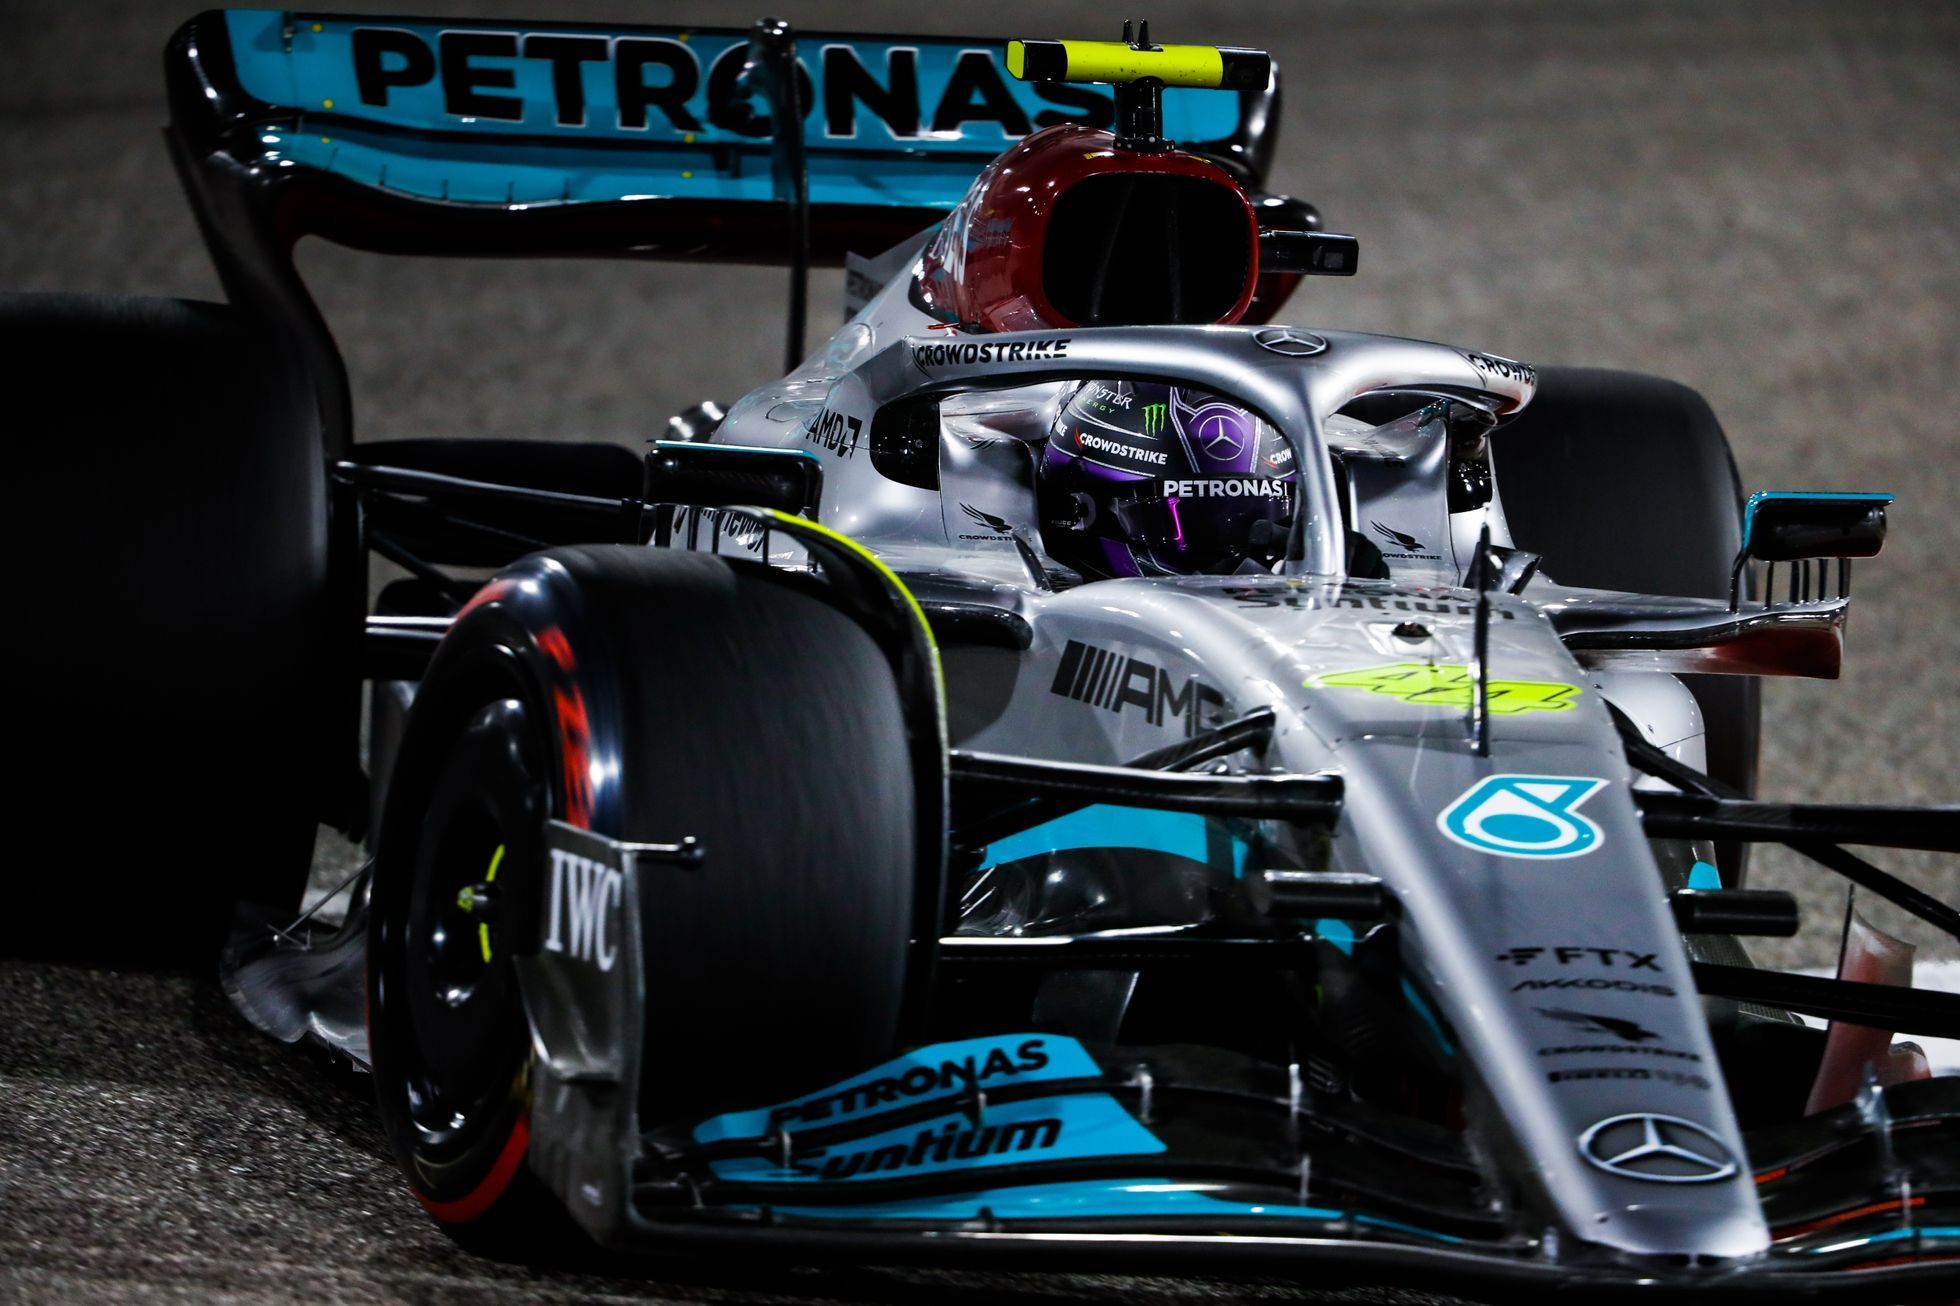 Testy F1 v Sáchiru 2022: Lewis Hamilton, Mercedes